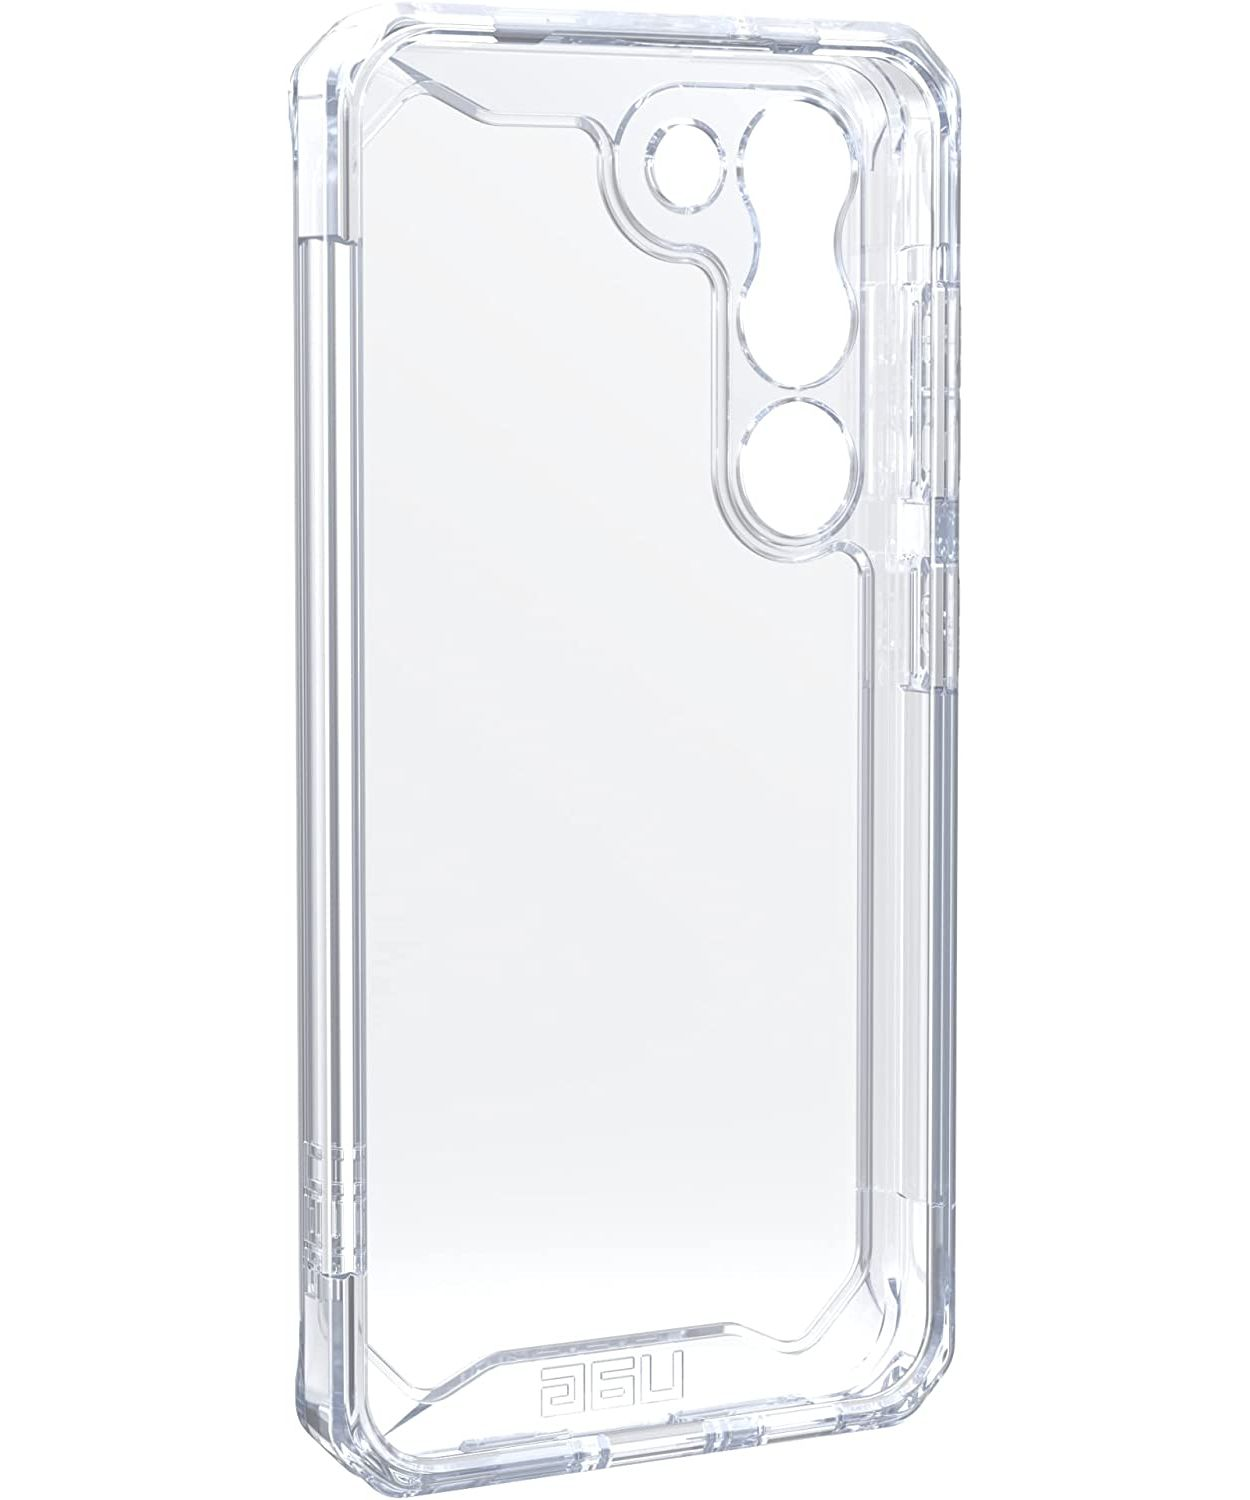 URBAN S23 Backcover, 5G, Galaxy Samsung, (transparent) ARMOR GEAR ice Plyo,